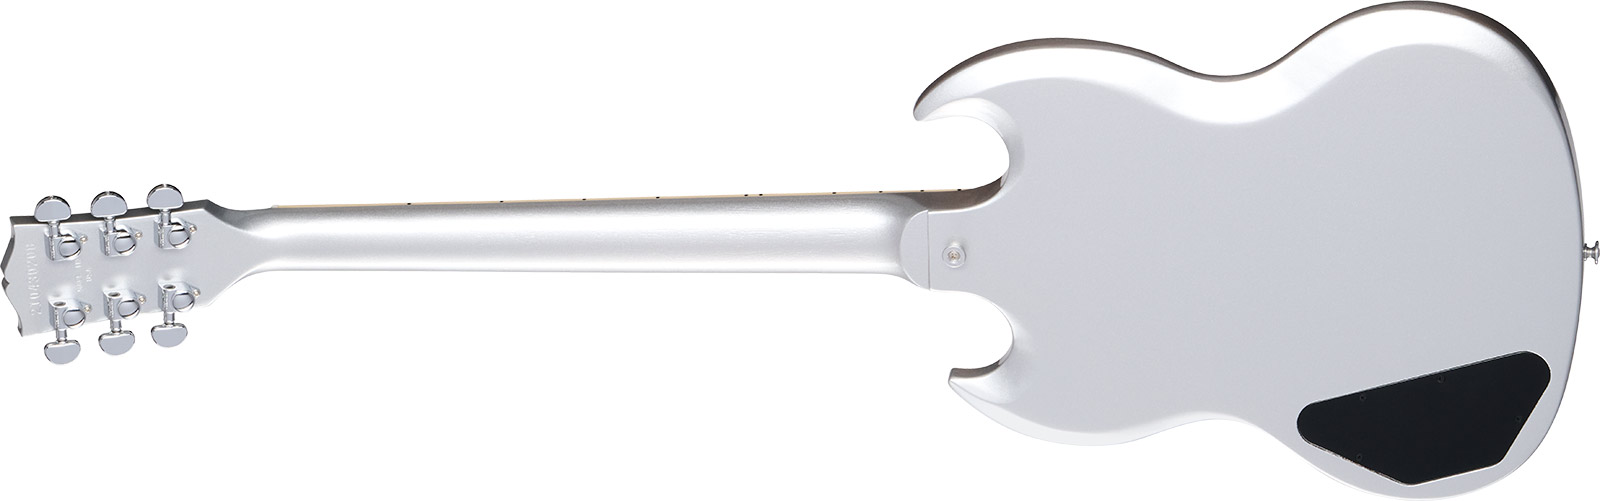 Gibson Sg Standard Custom Color 2h Ht Rw - Silver Mist - Double cut electric guitar - Variation 1